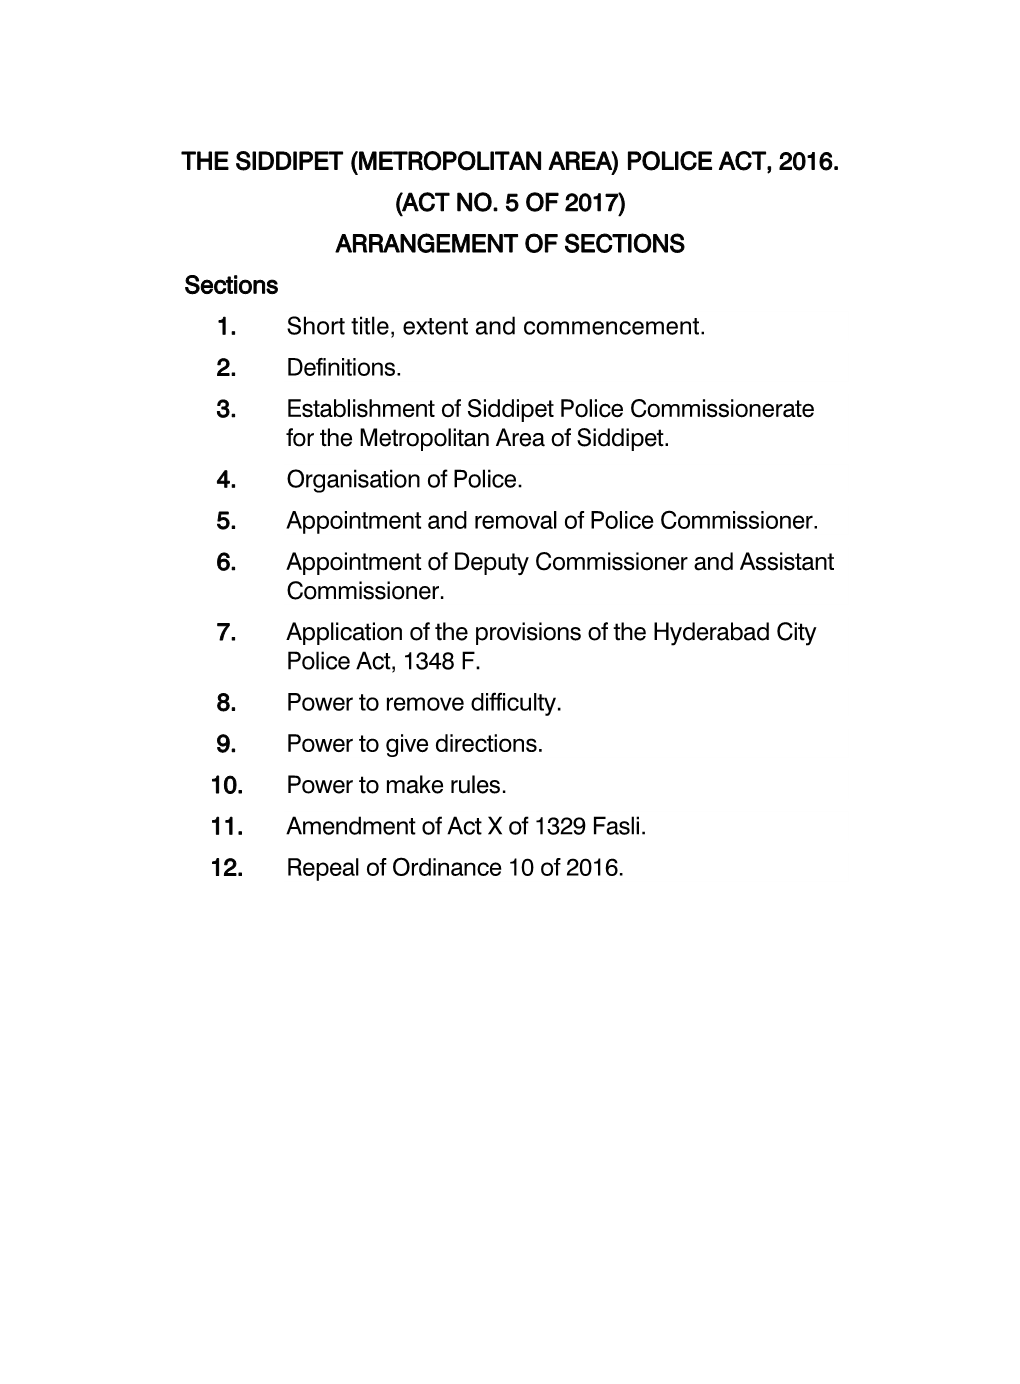 The Siddipet (Metropolitan Area) Police Act, 2016. (Act No